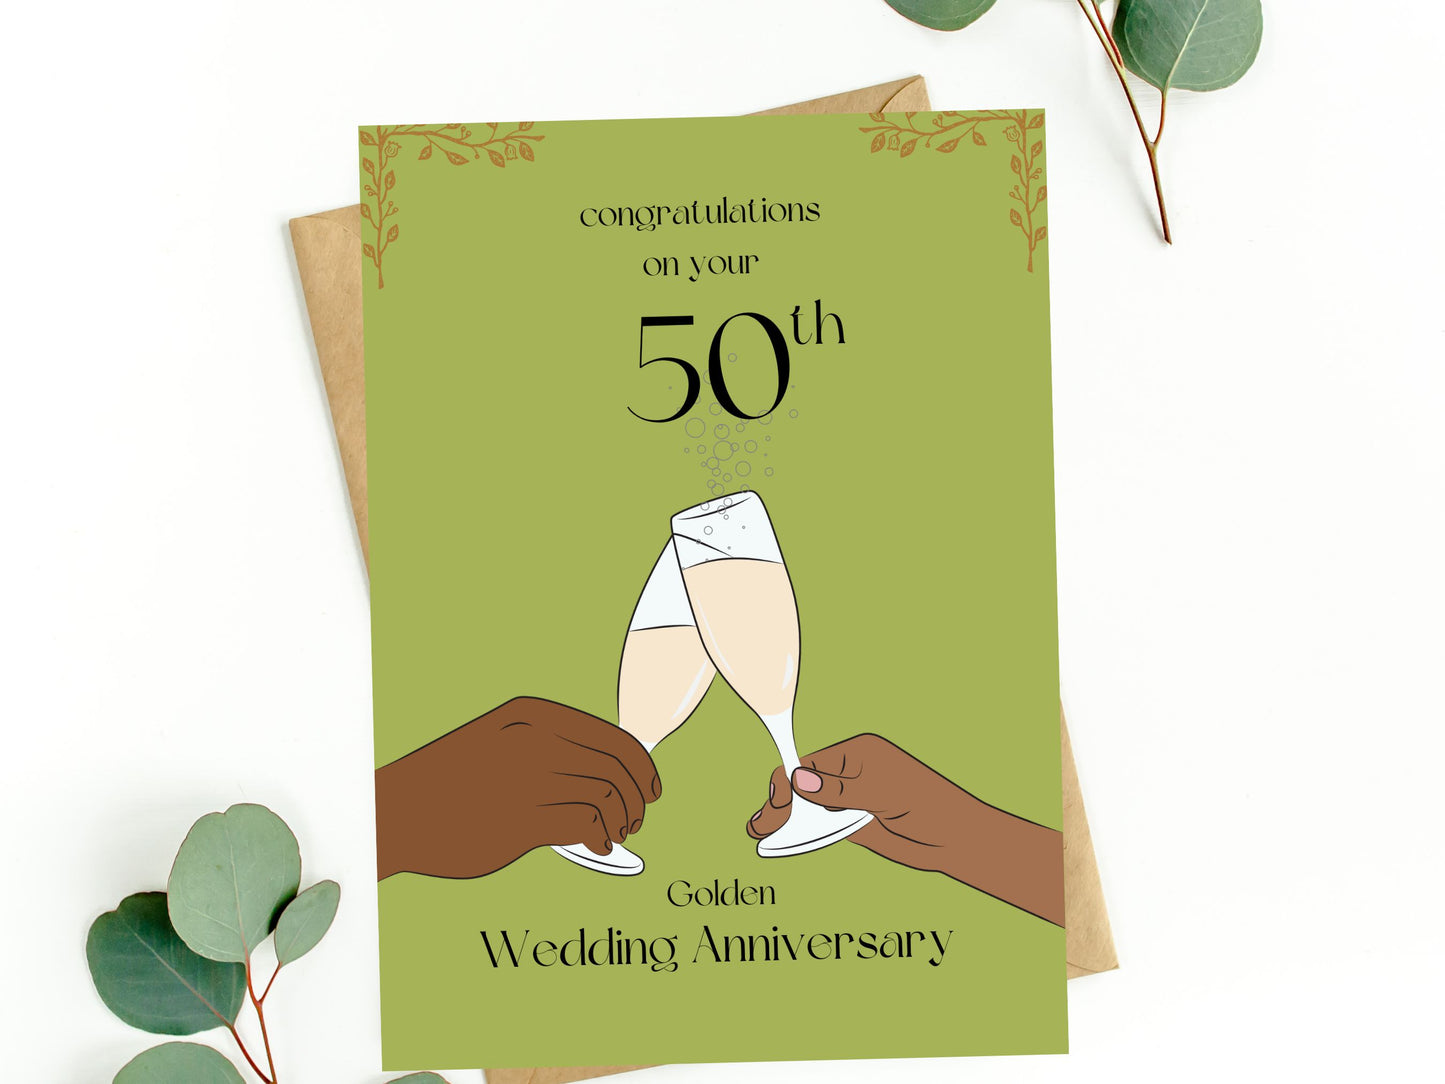 Wedding Anniversary Celebration Cards